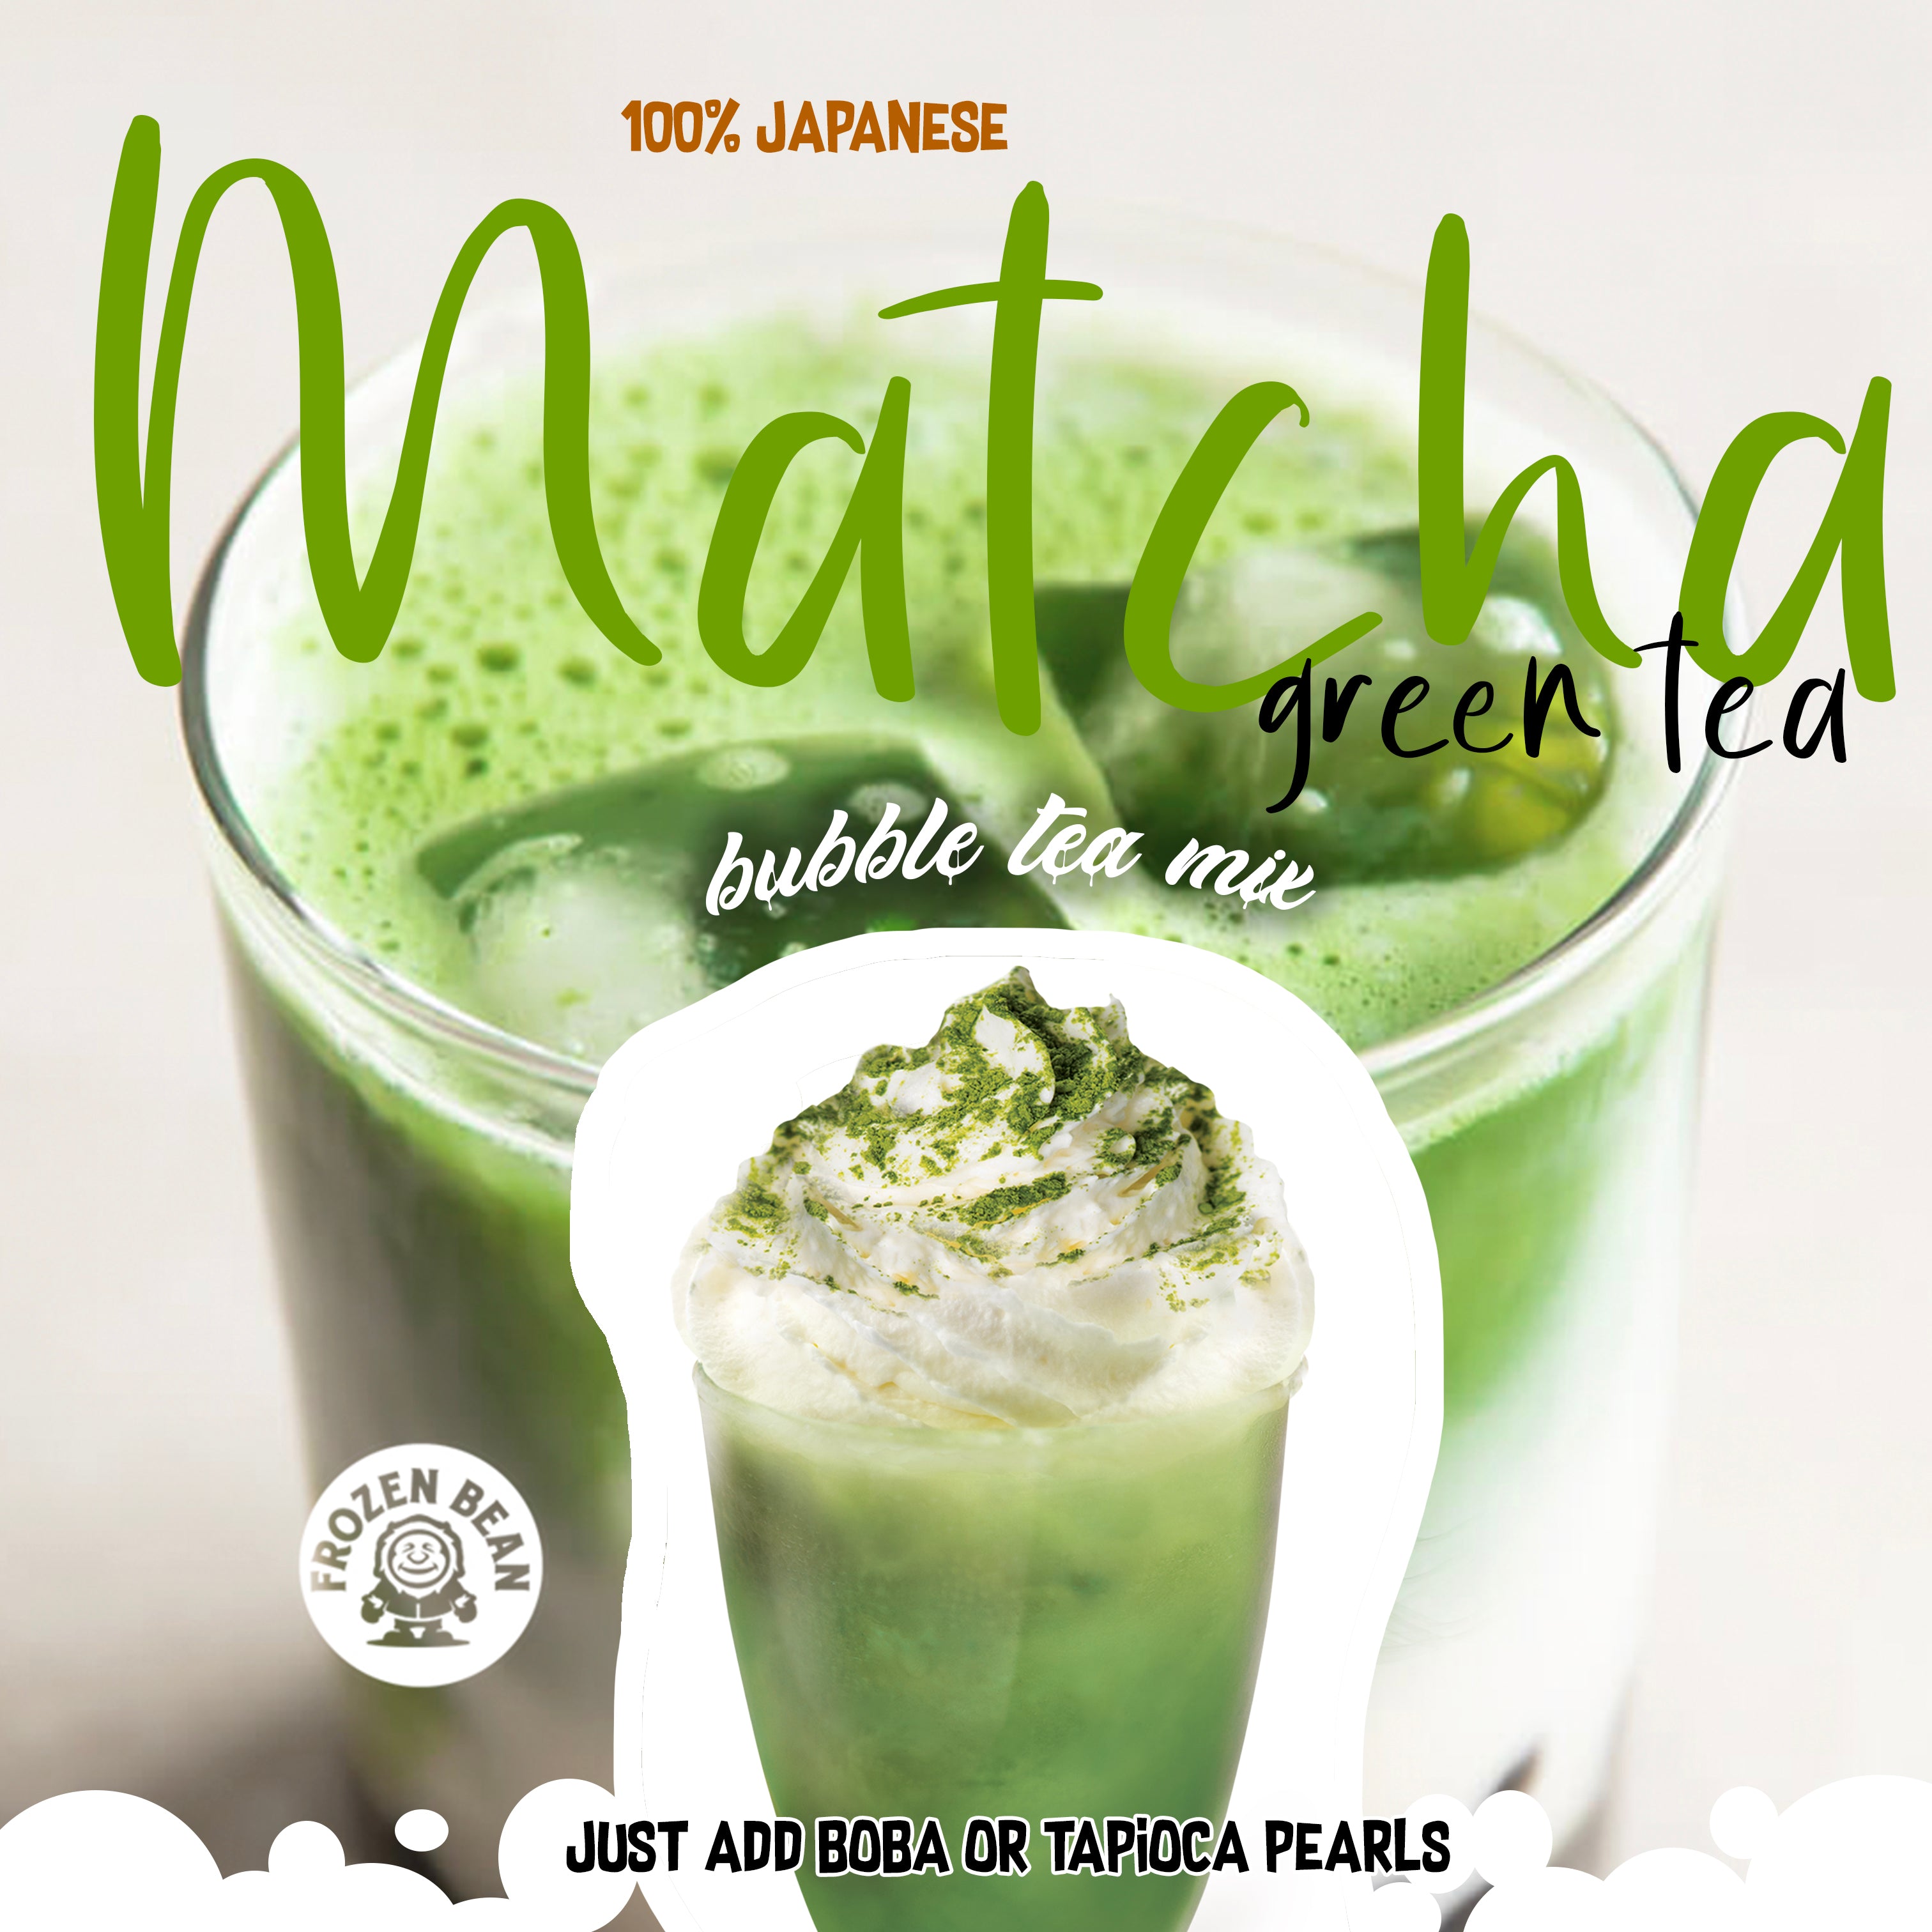 akademisk Grader celsius avis The Frozen Bean Ultra-Premium Matcha Green Tea - Bubble Tea Mix